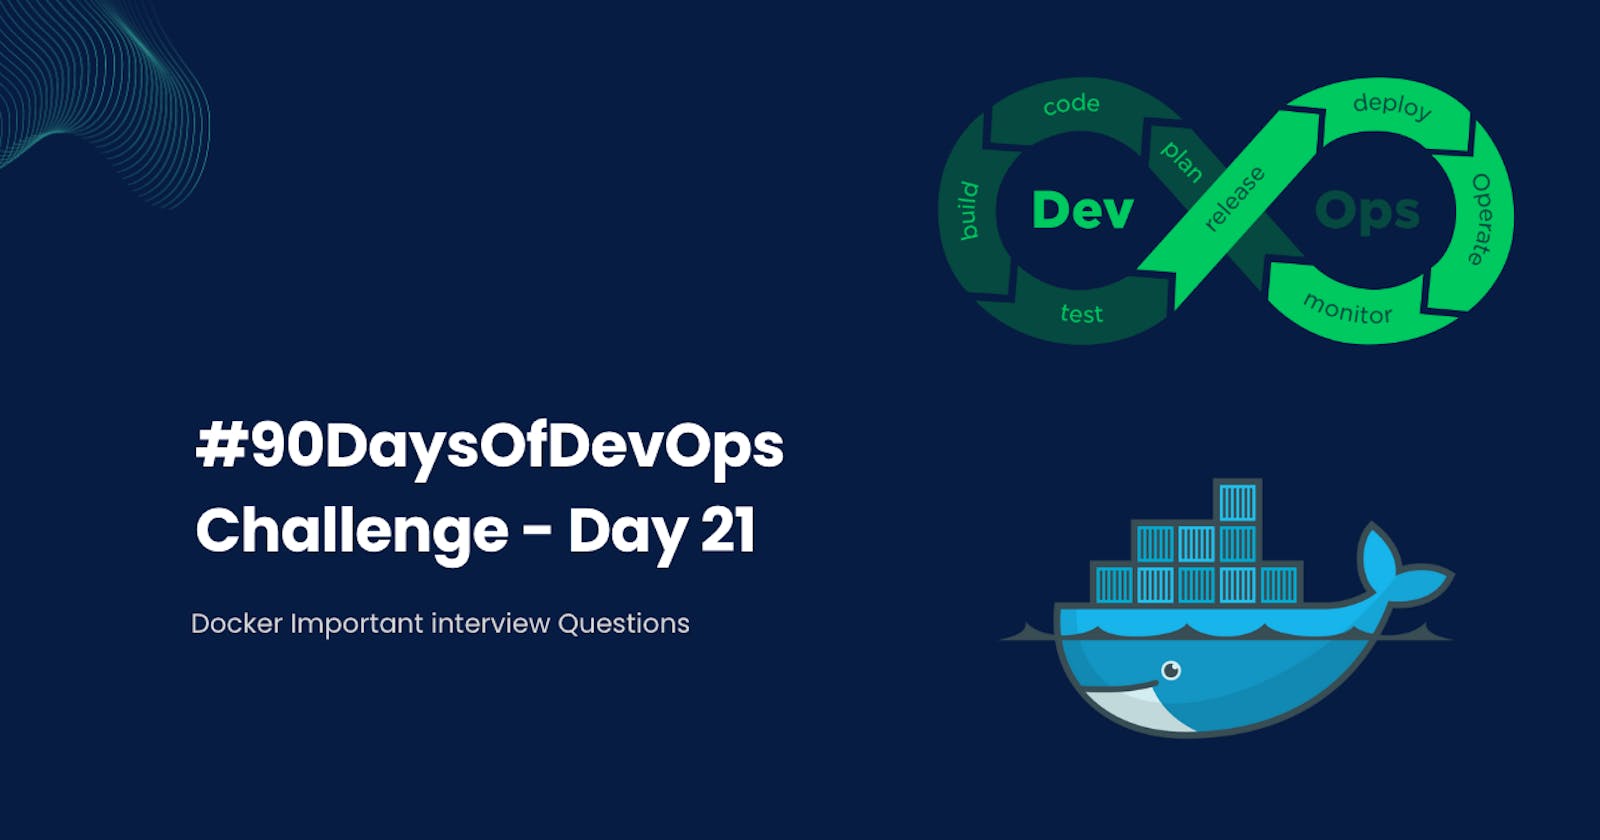 #90DaysOfDevOps Challenge - Day 21 - Docker Important Interview Questions